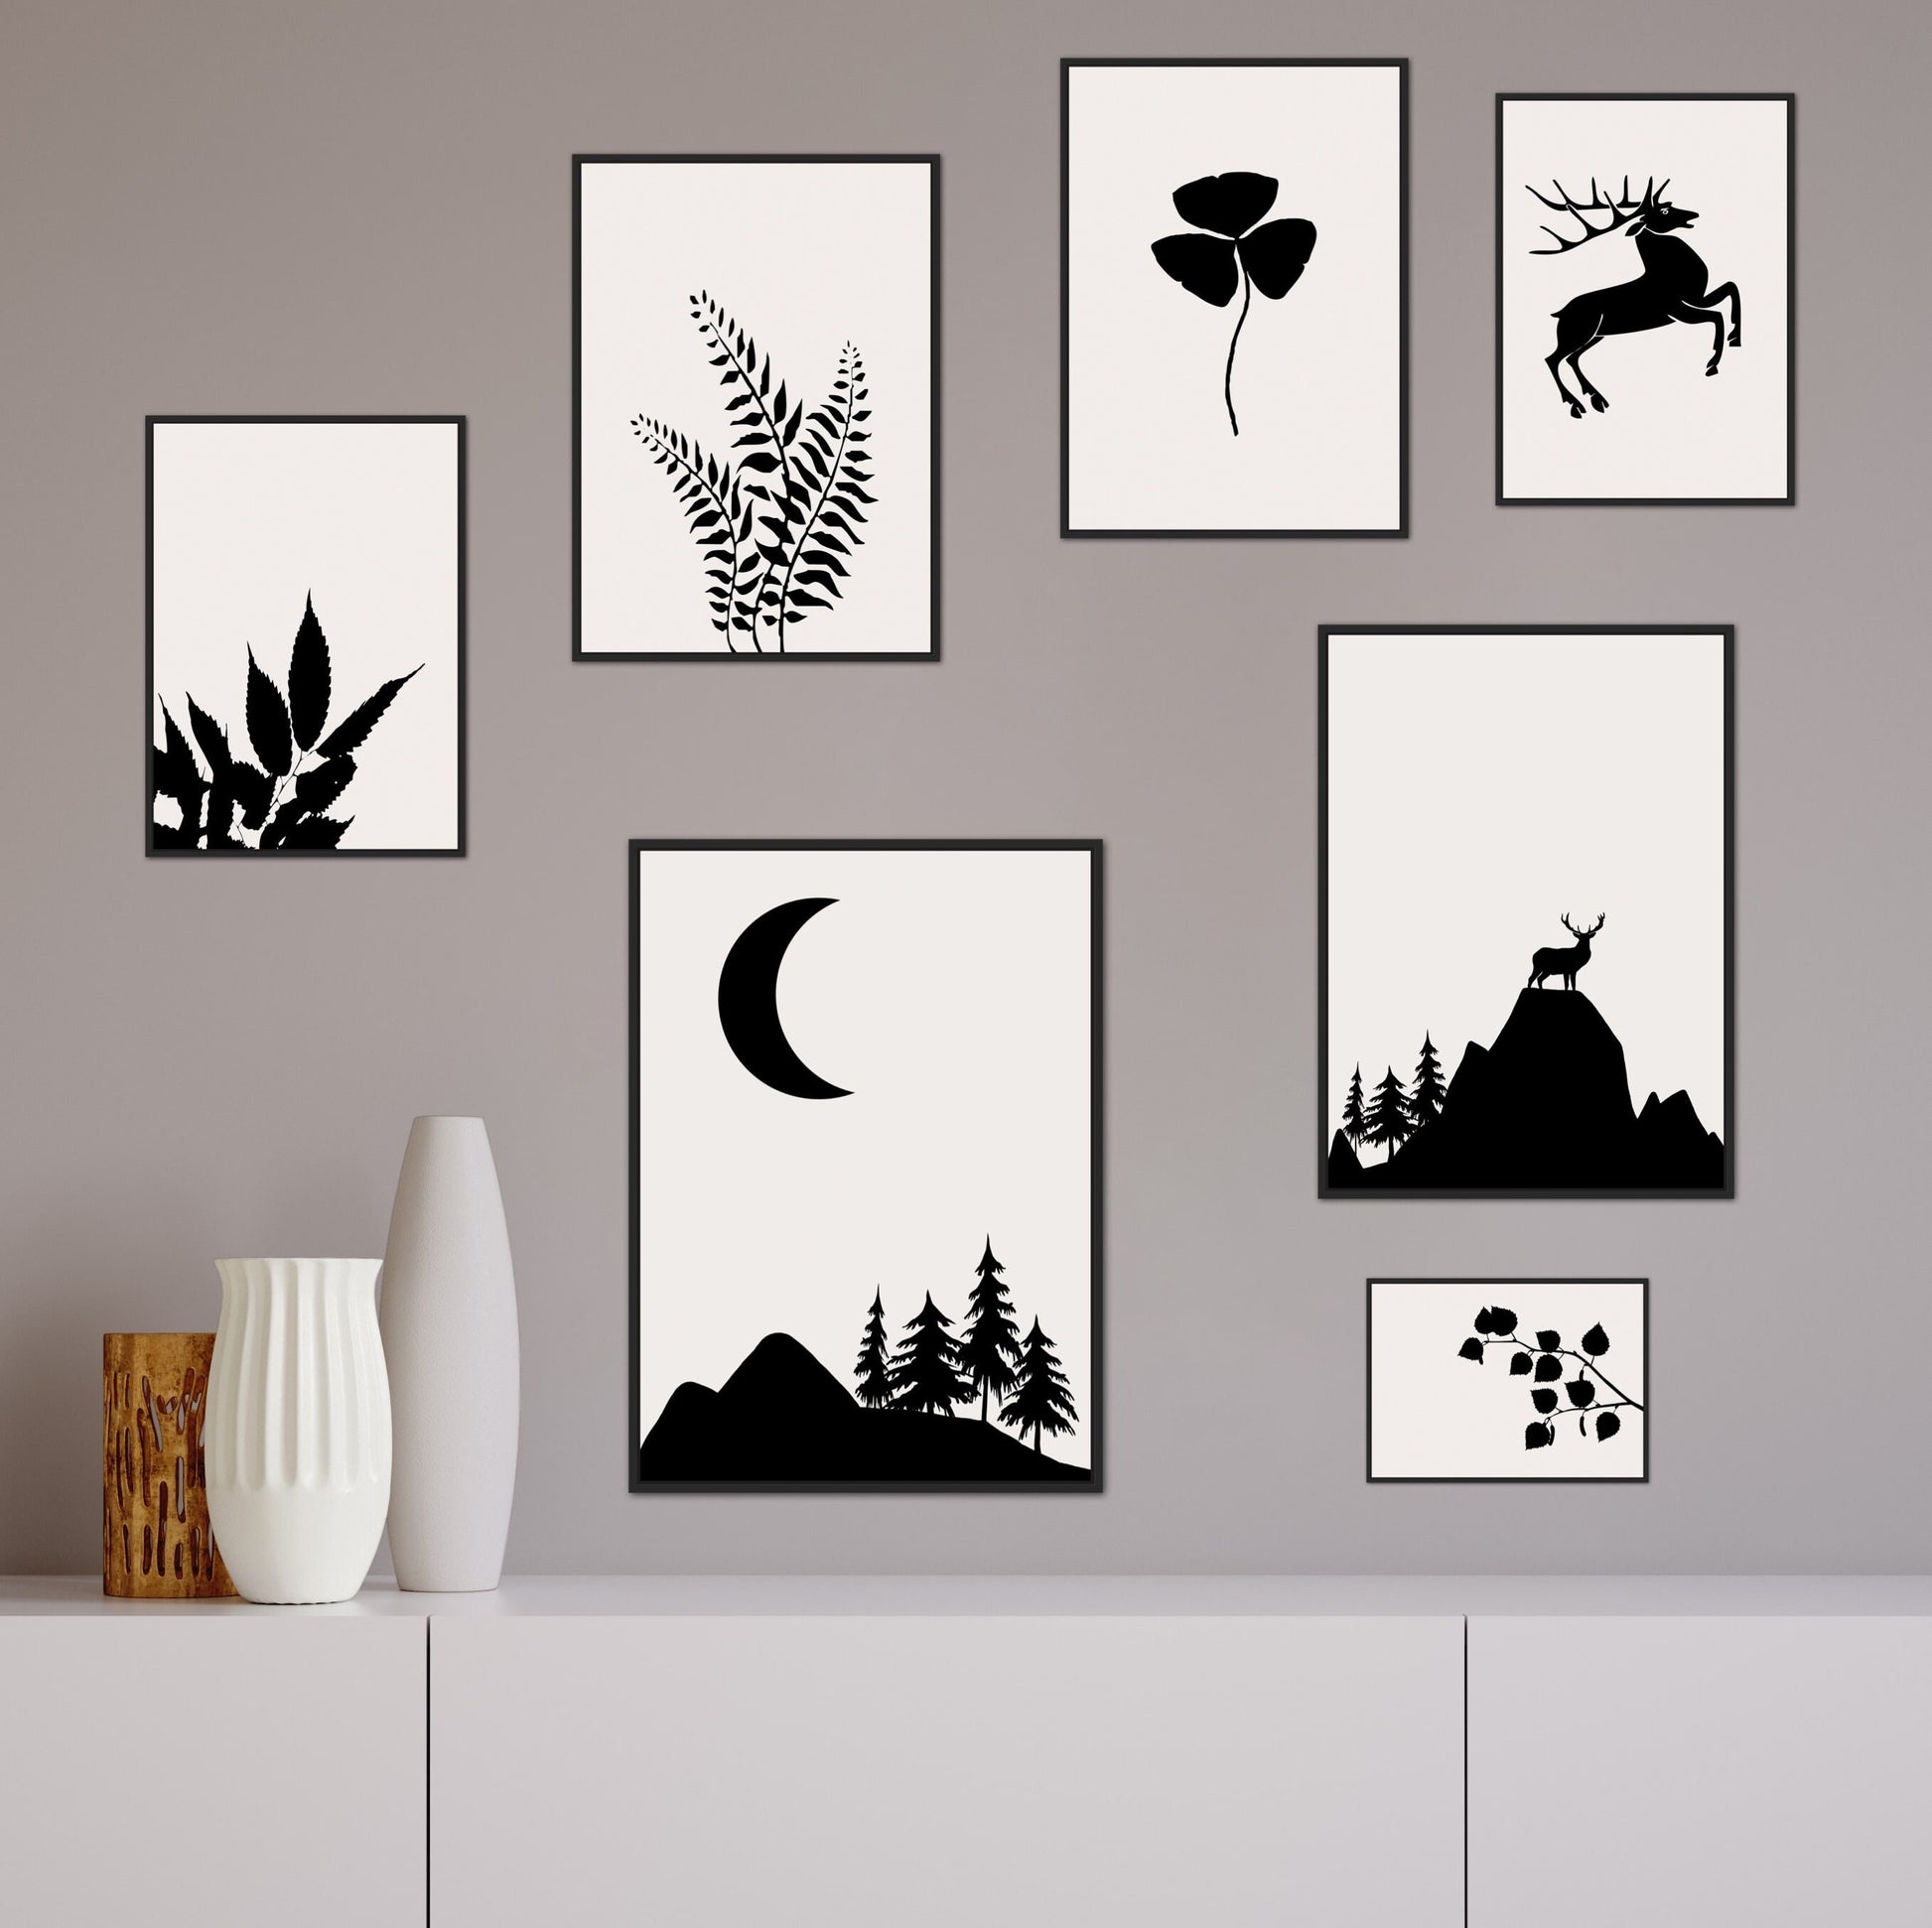 Minimalist floral wall art set of 7 DIGITAL PRINTS, mountain deer, black & white artwork Botanical Minimalistic wall gallery, country decor